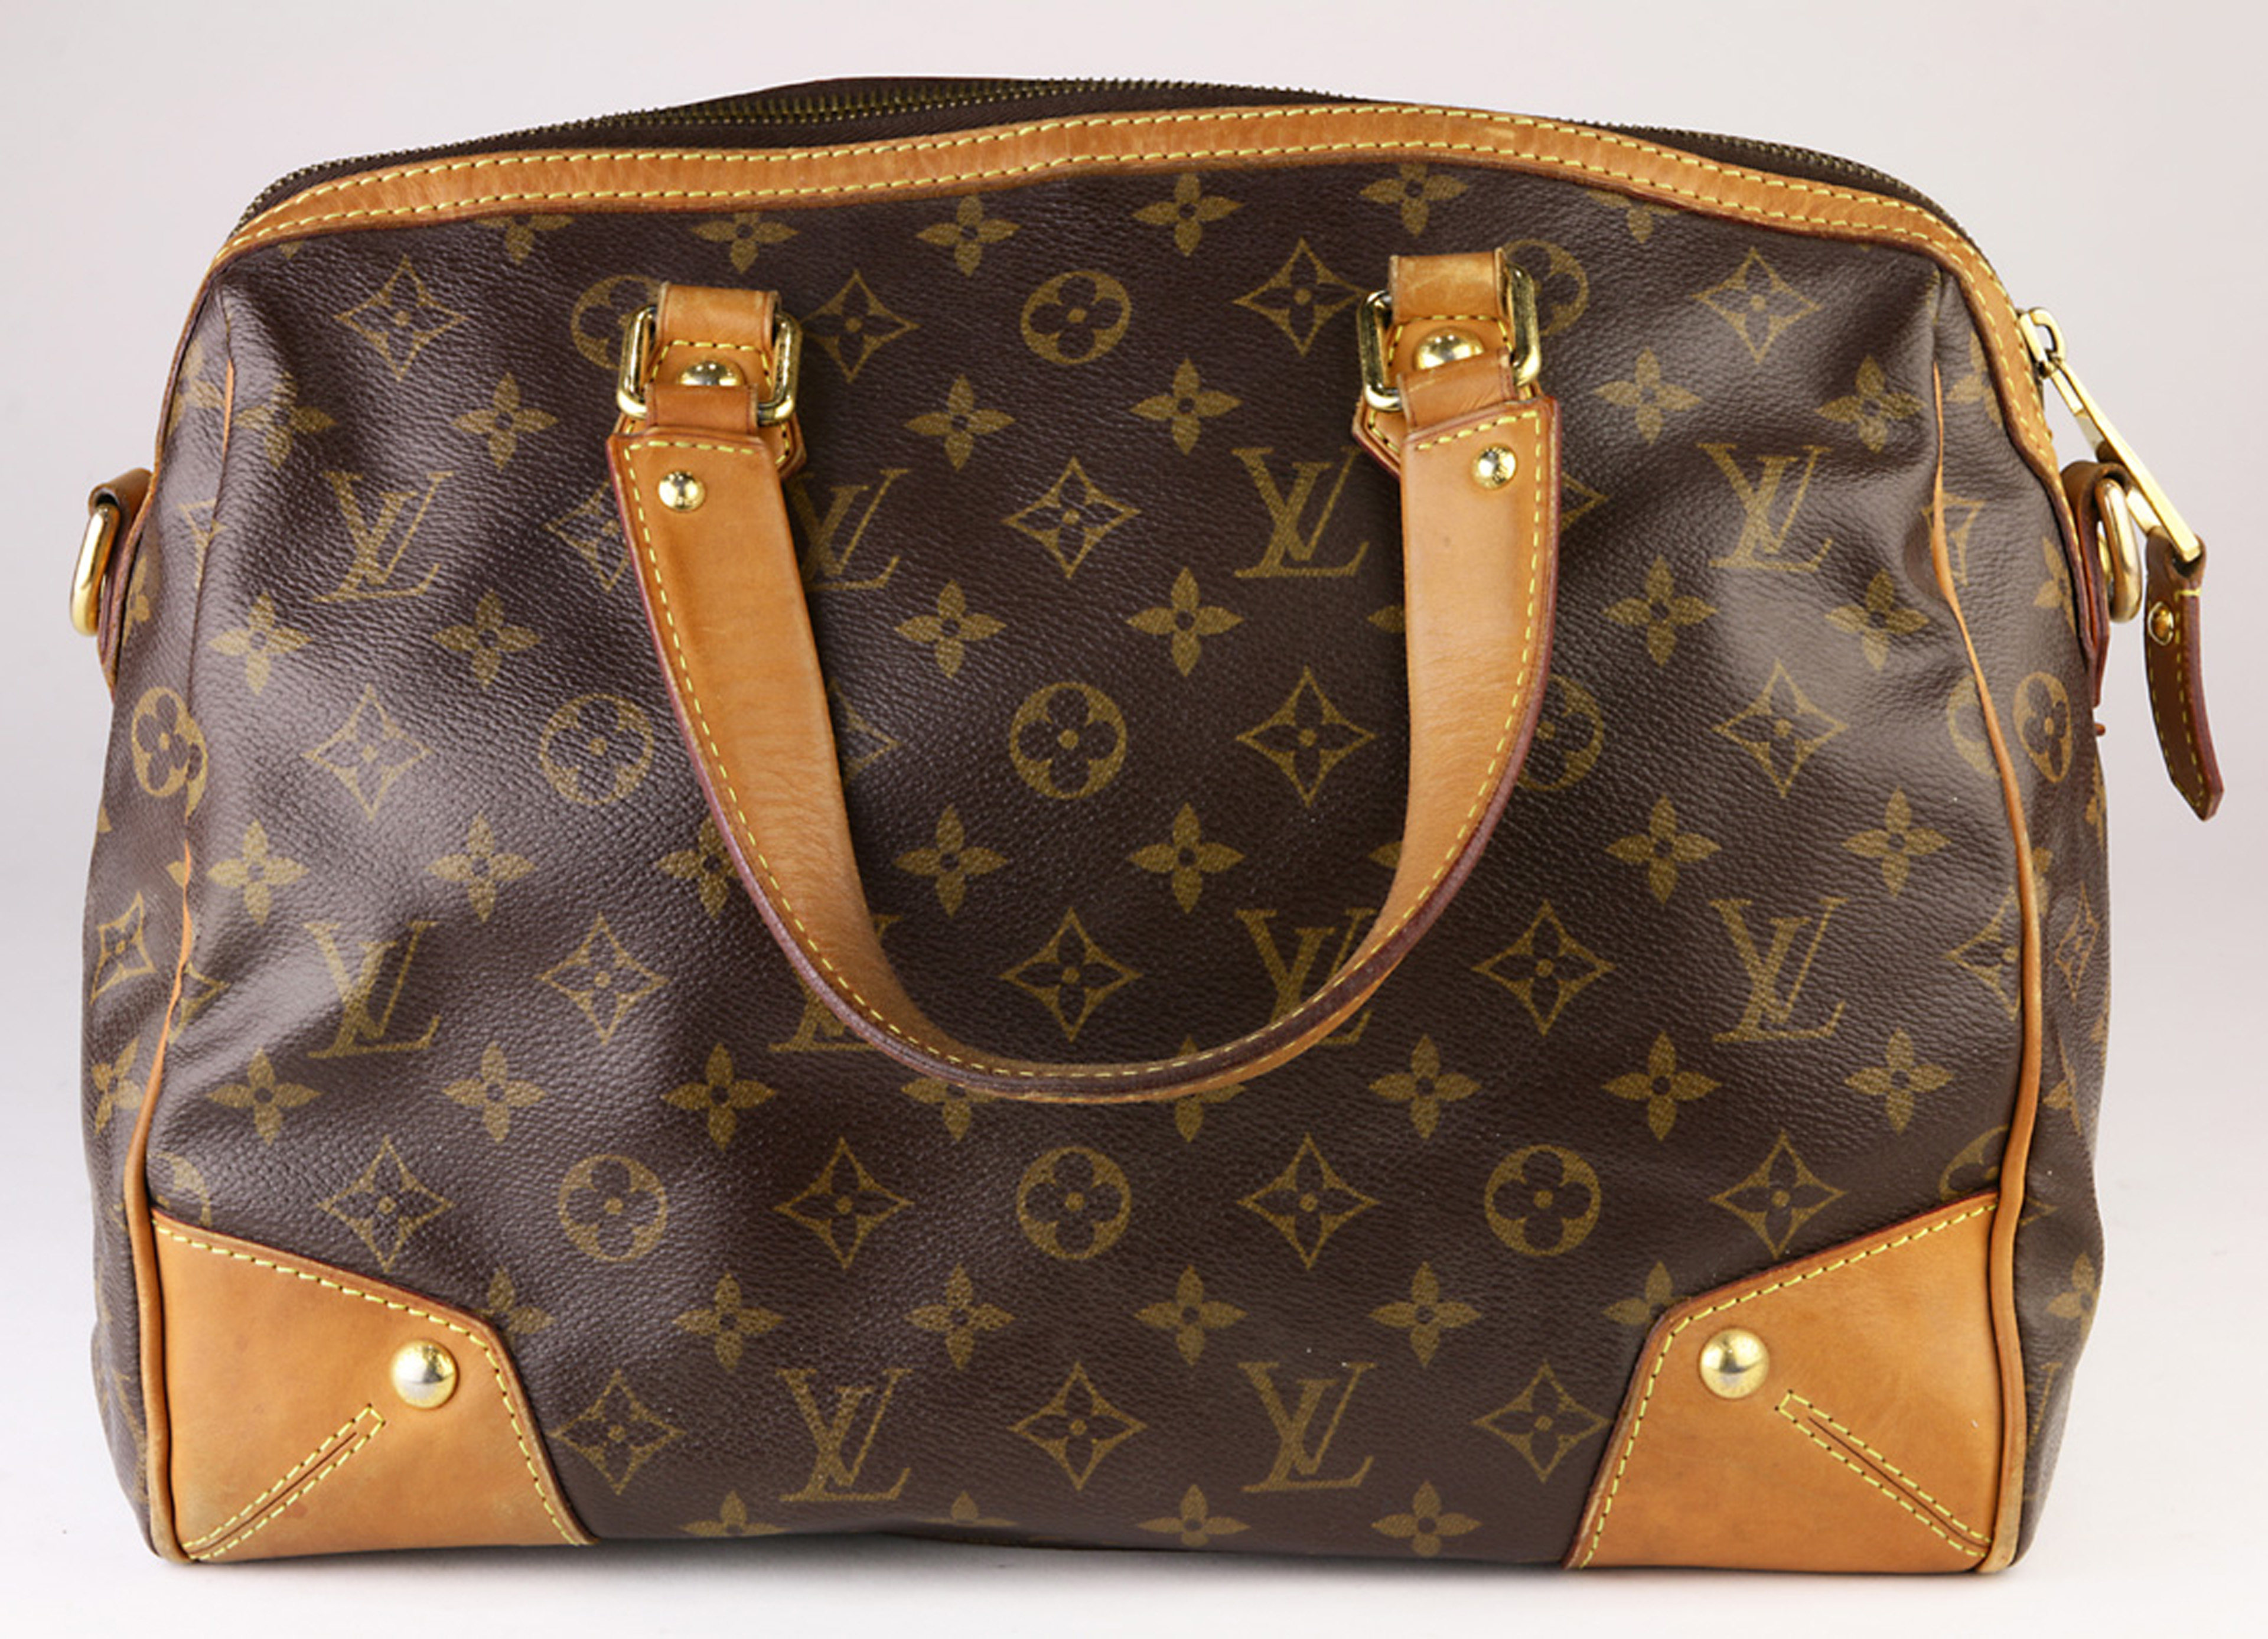 A Louis Vuitton Zipper handbag